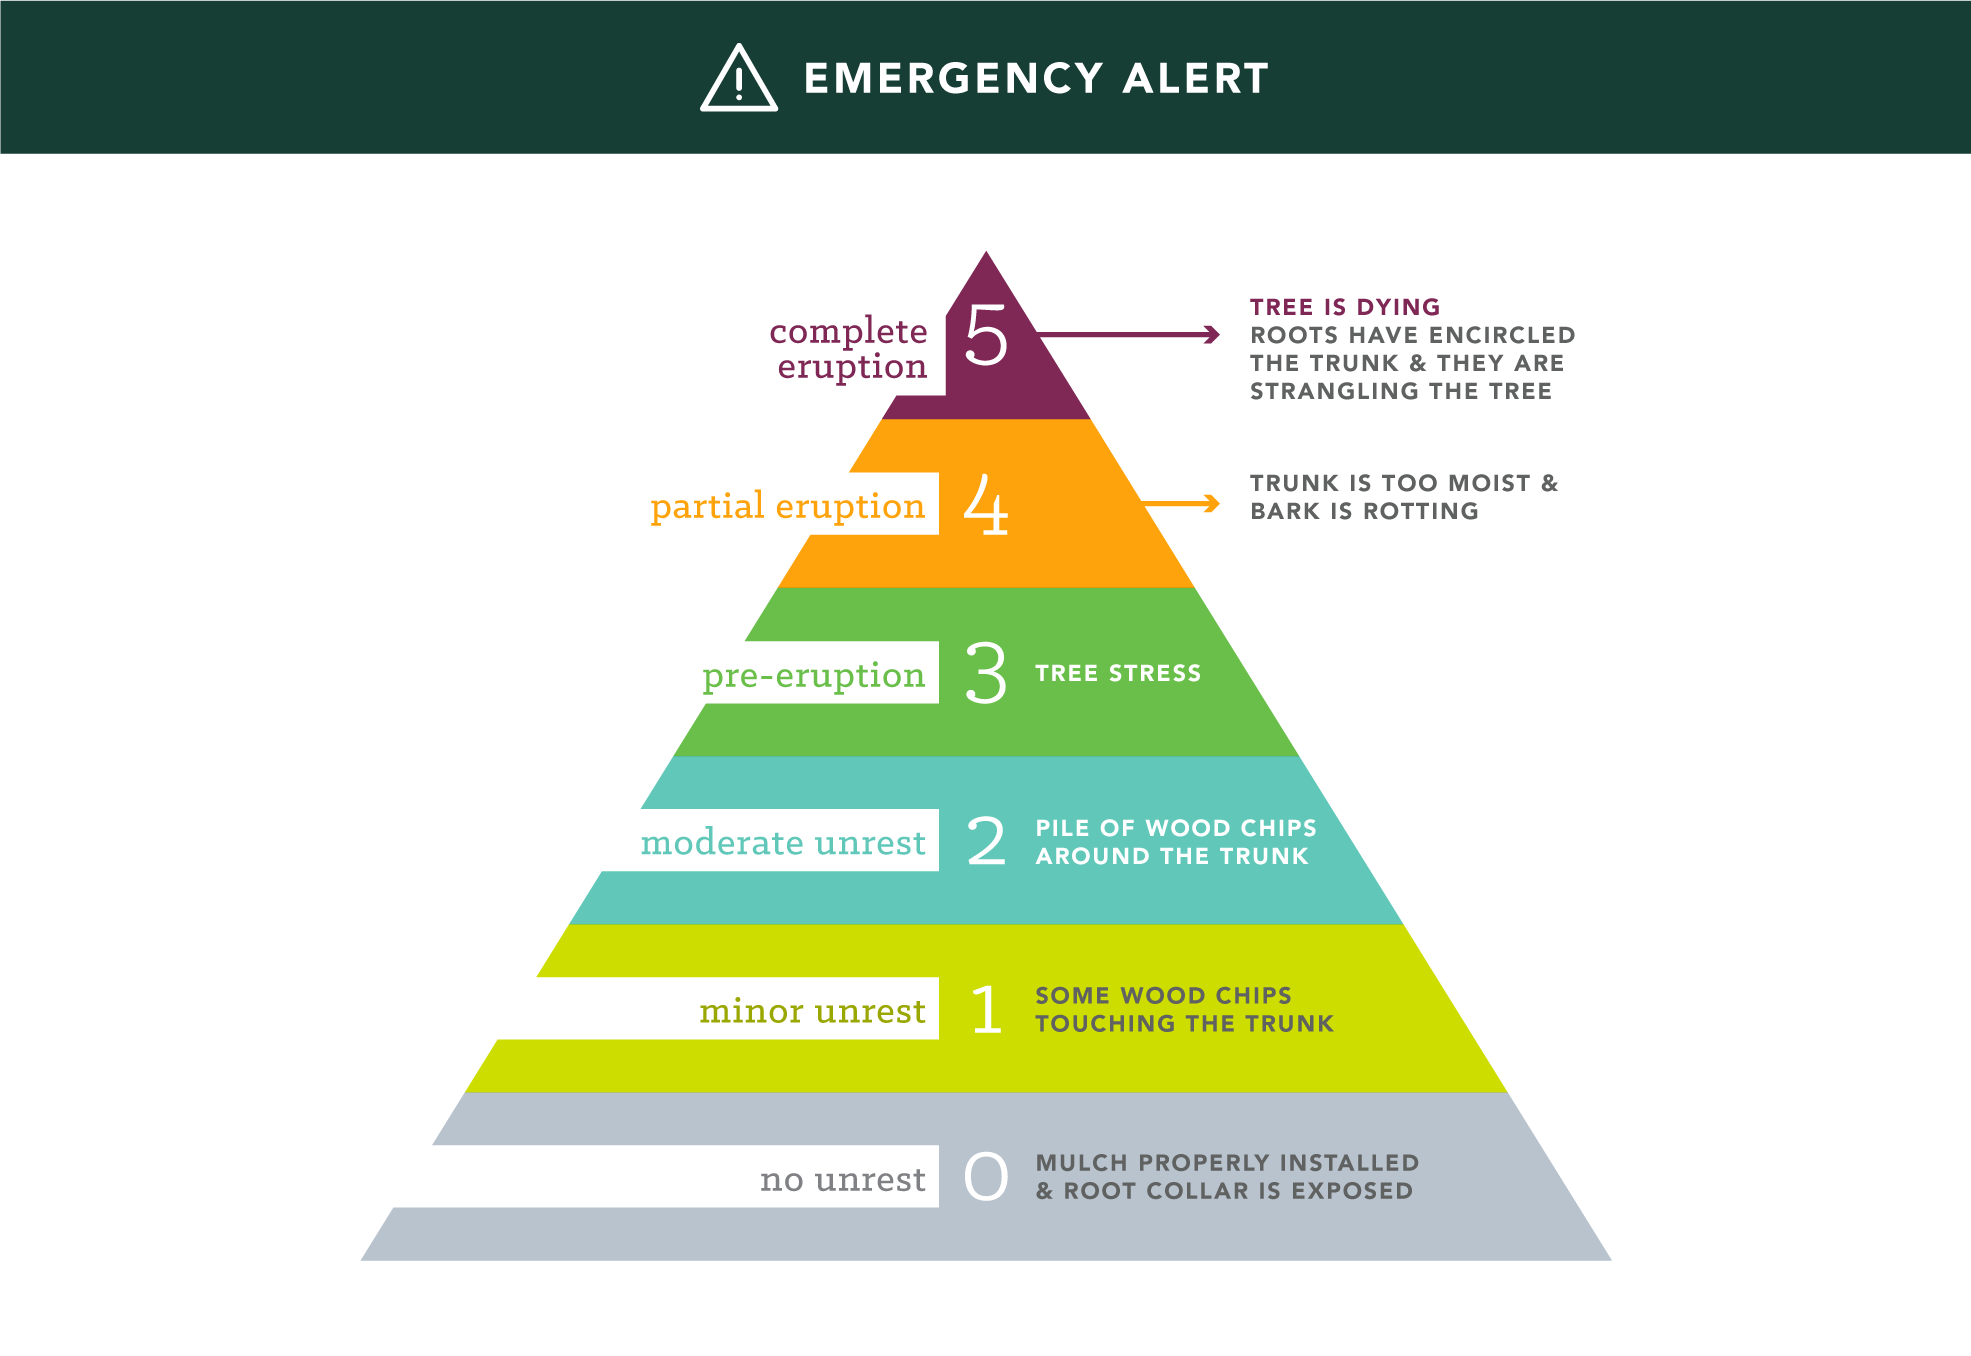 Emergency Alert System for Mulch Volcanoes